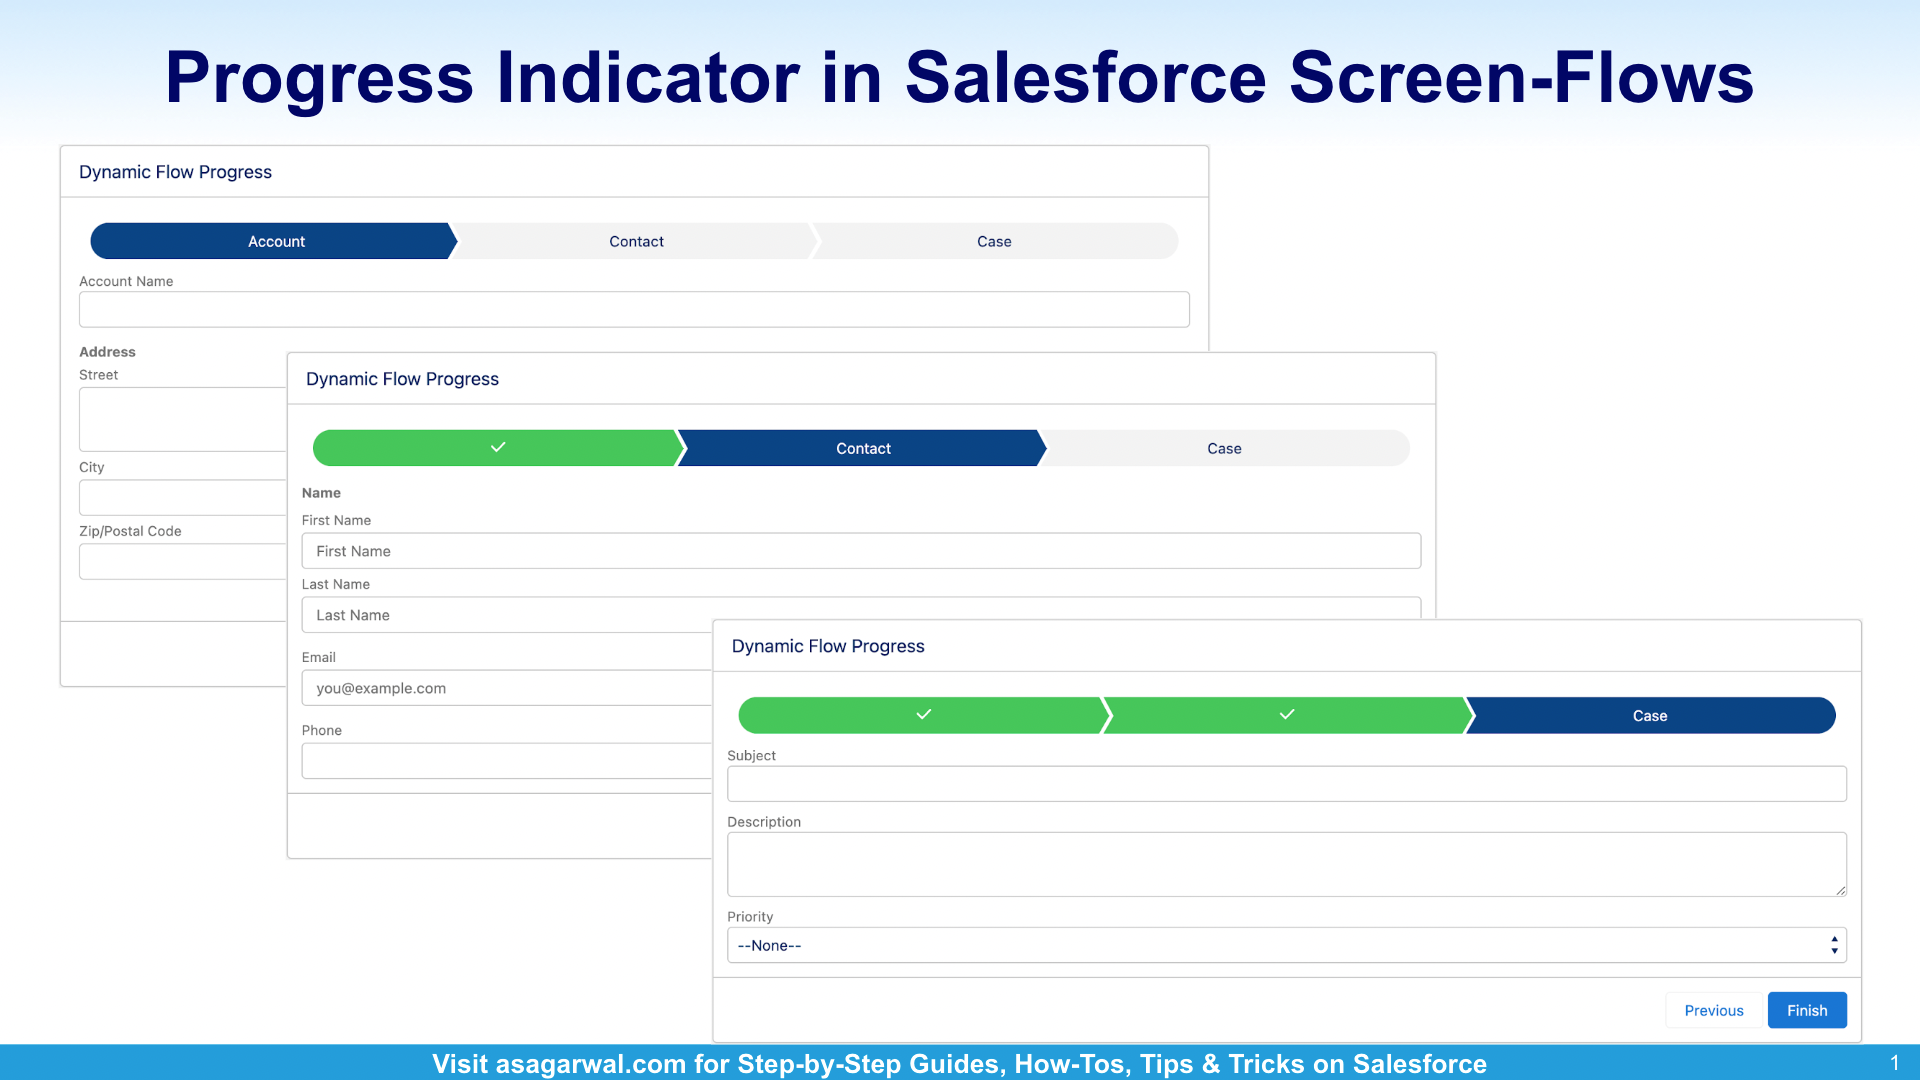 Show Progress Indicator in Salesforce Screen-Flows